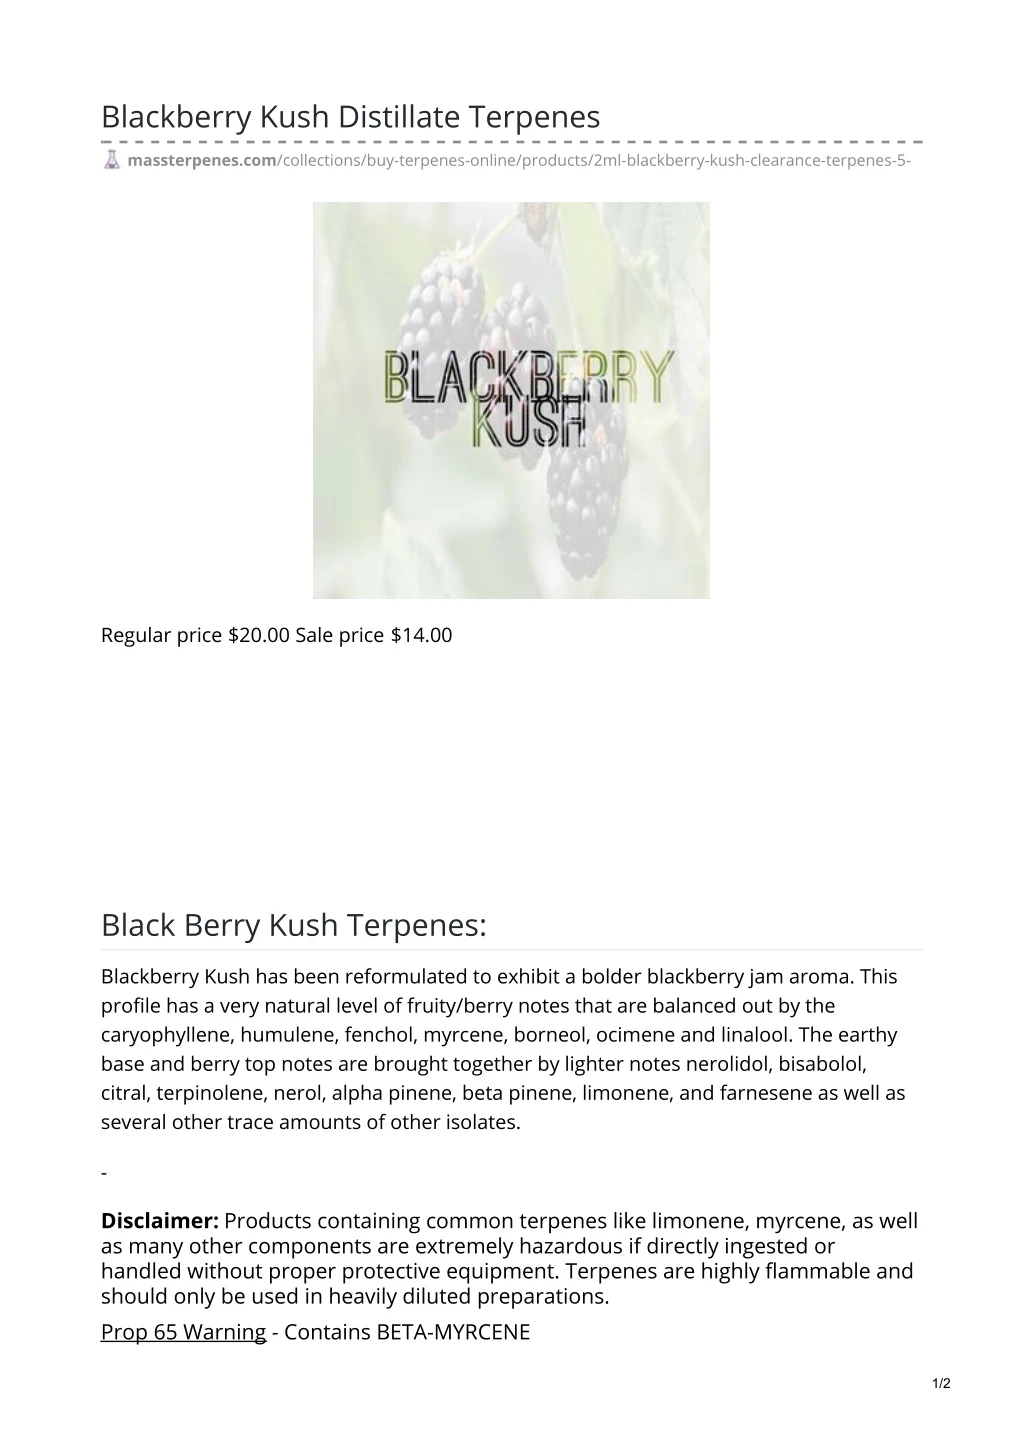 blackberry kush distillate terpenes